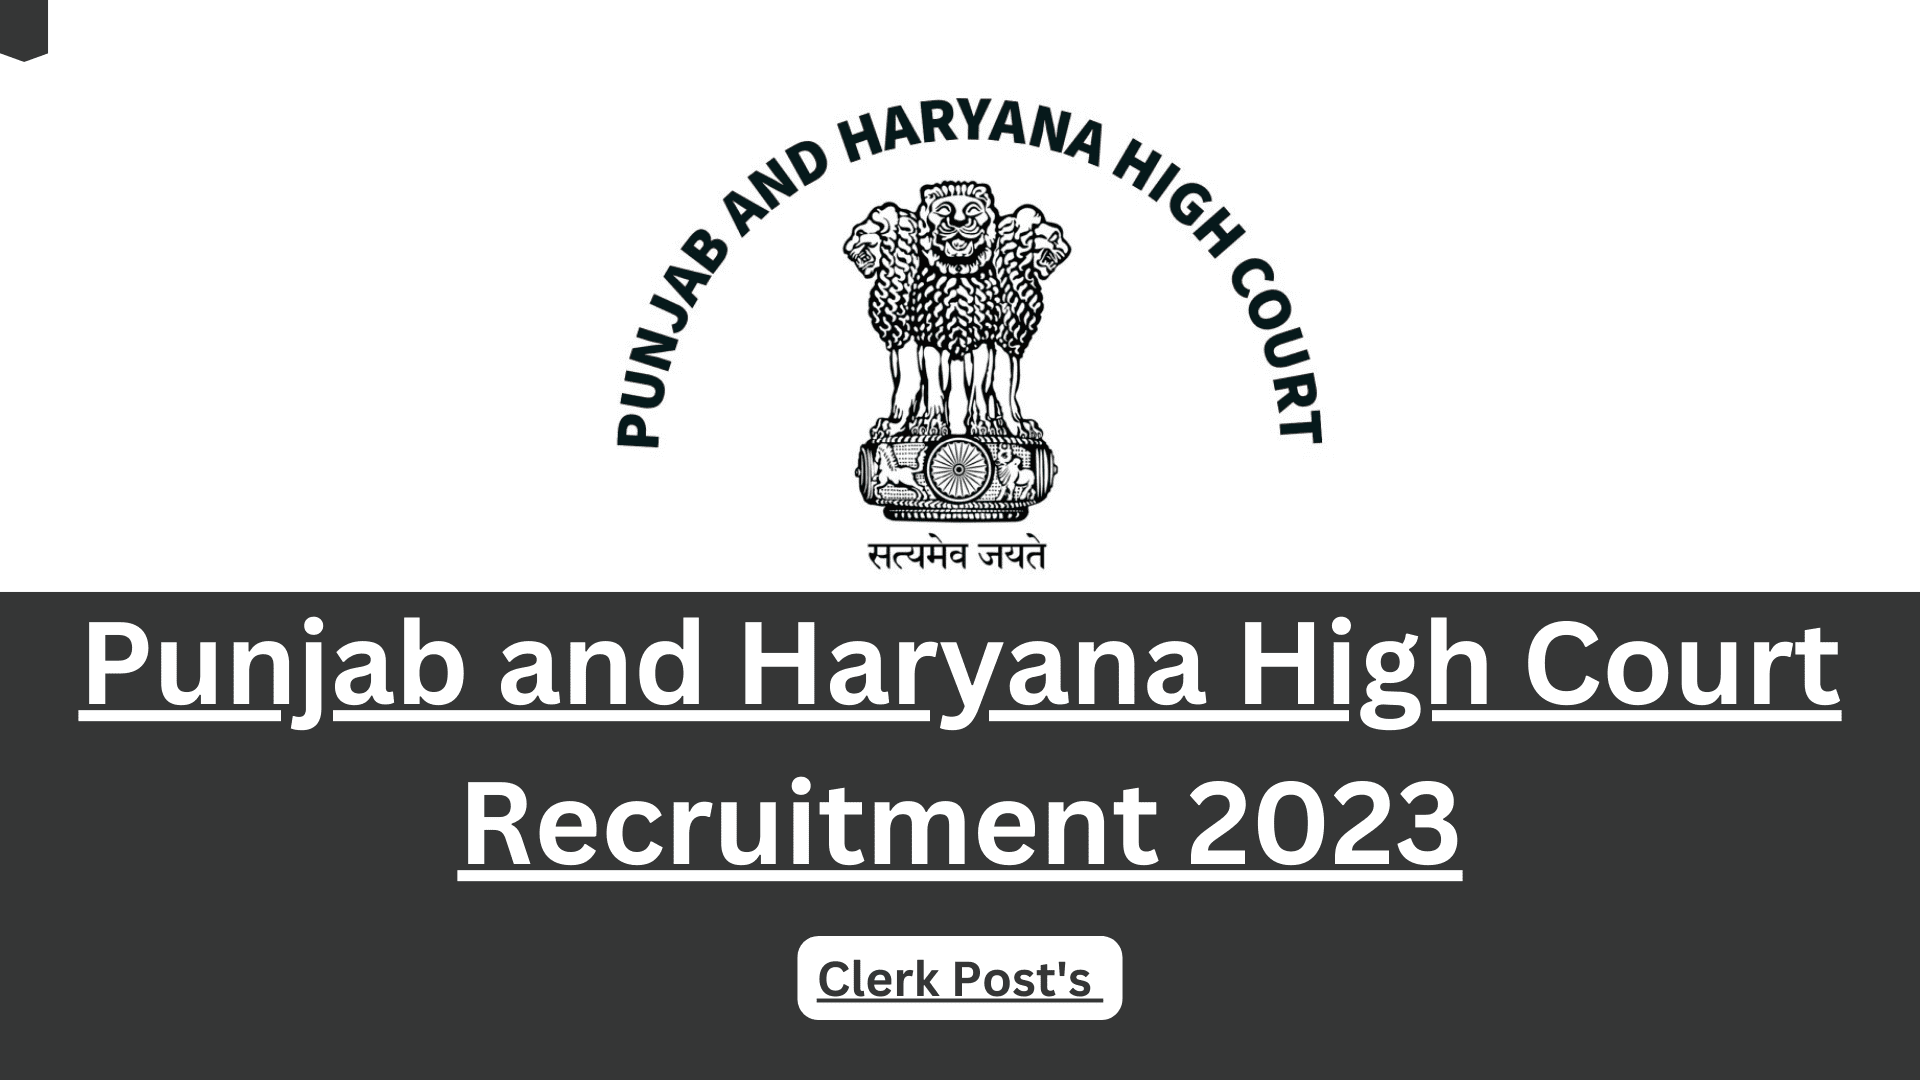 Punjab and Haryana High Court Clerk Recruitment 2023